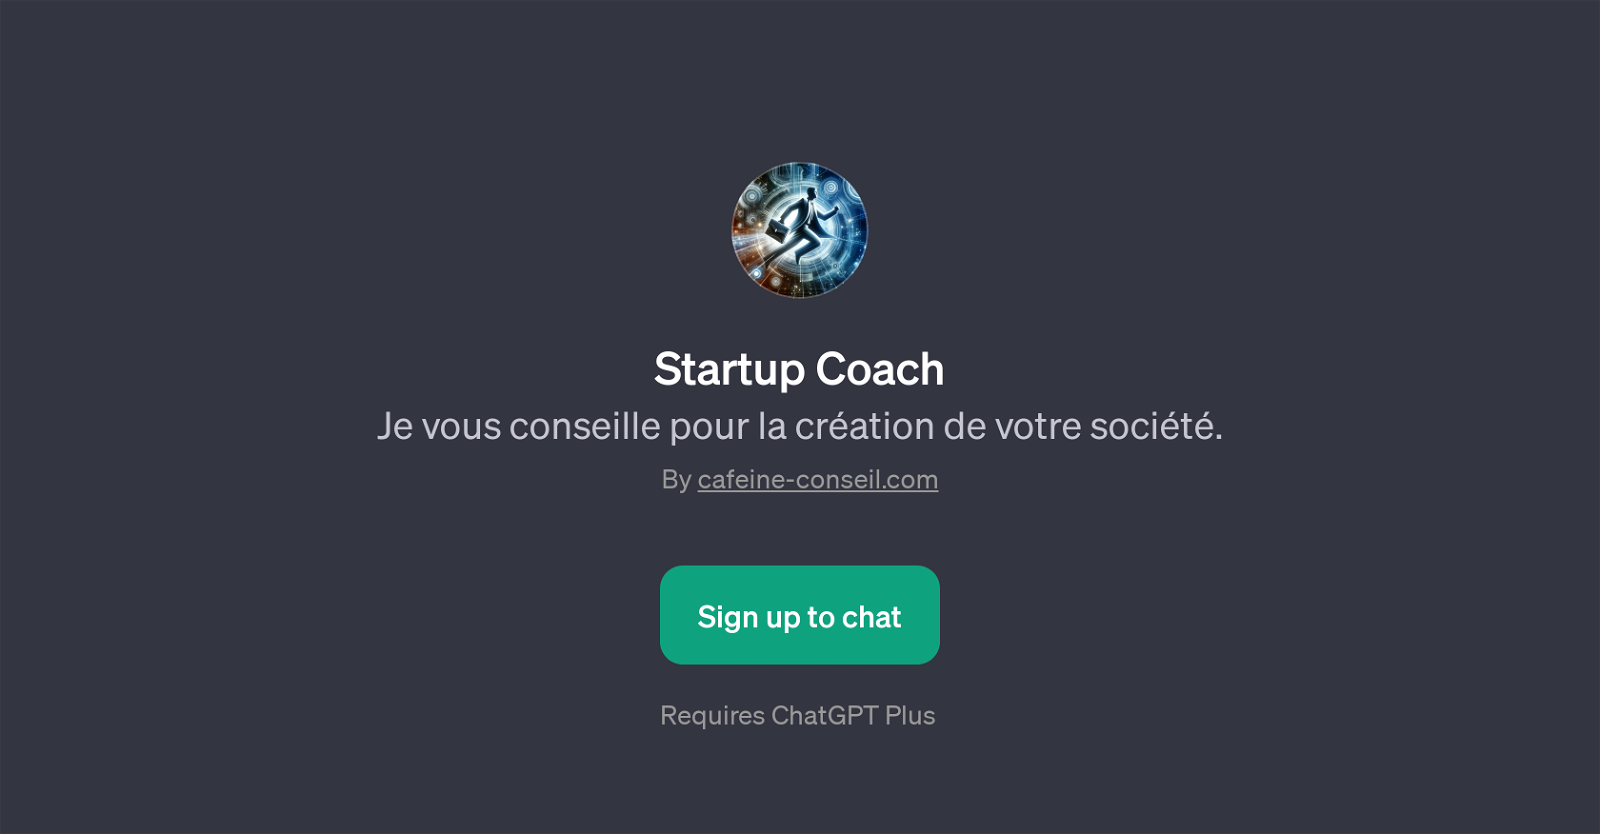 Startup Coach website